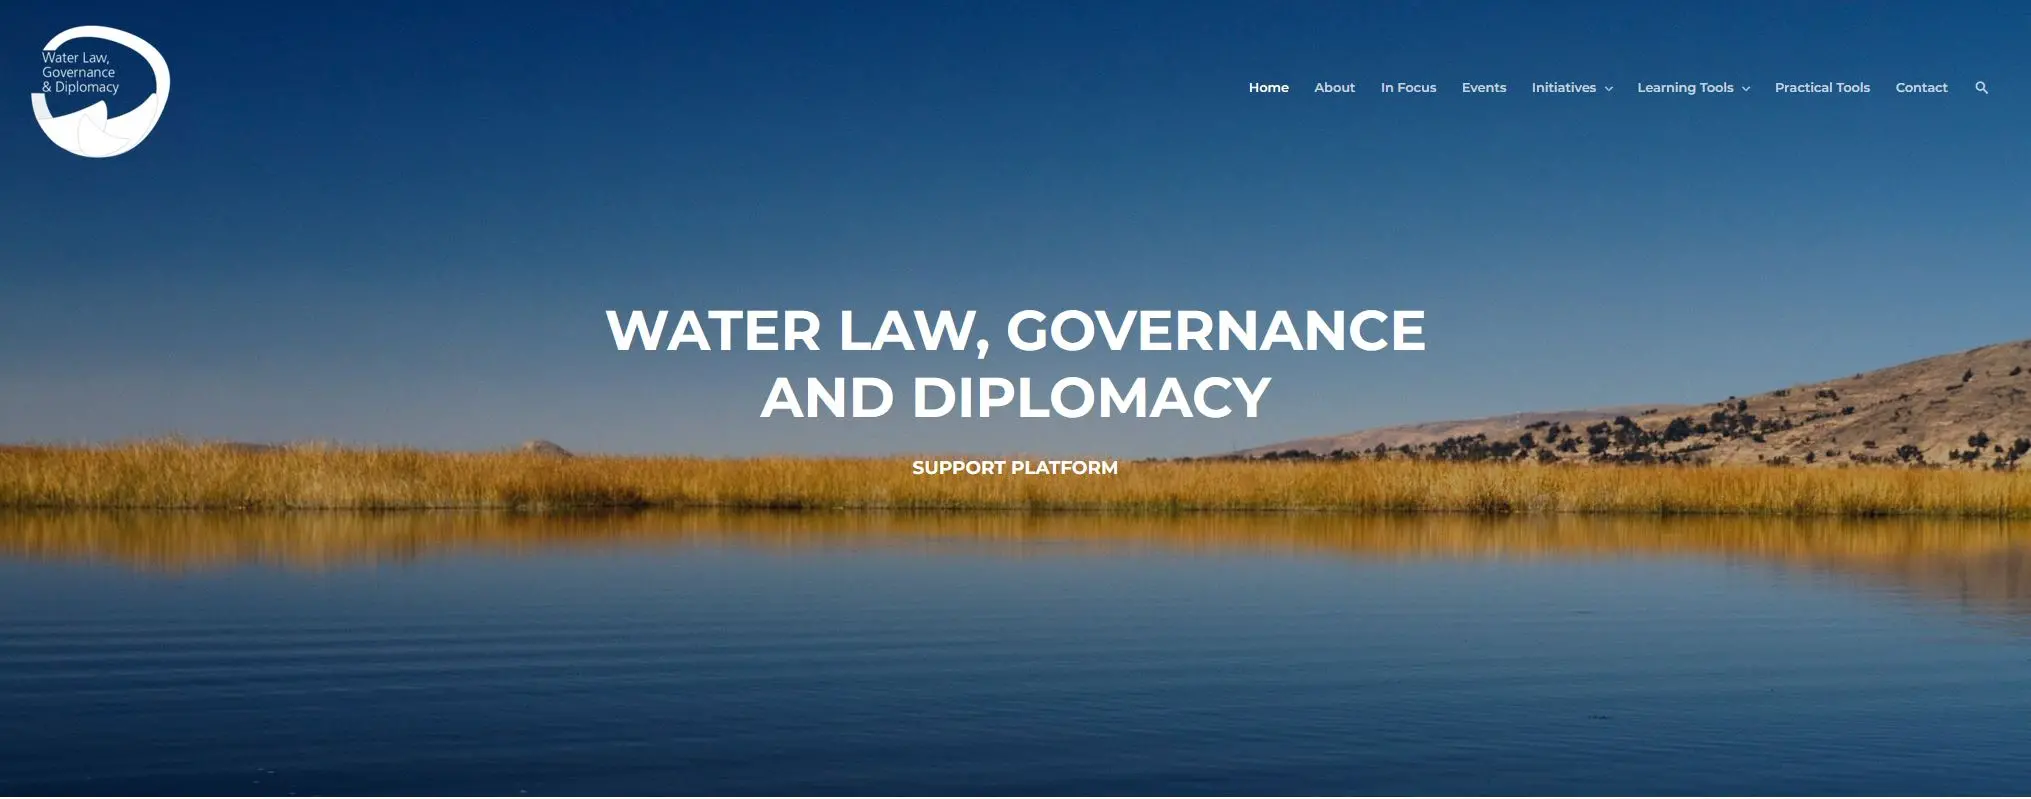 WaDi-Water Law, Governance and Diplomacy portal, homepage 